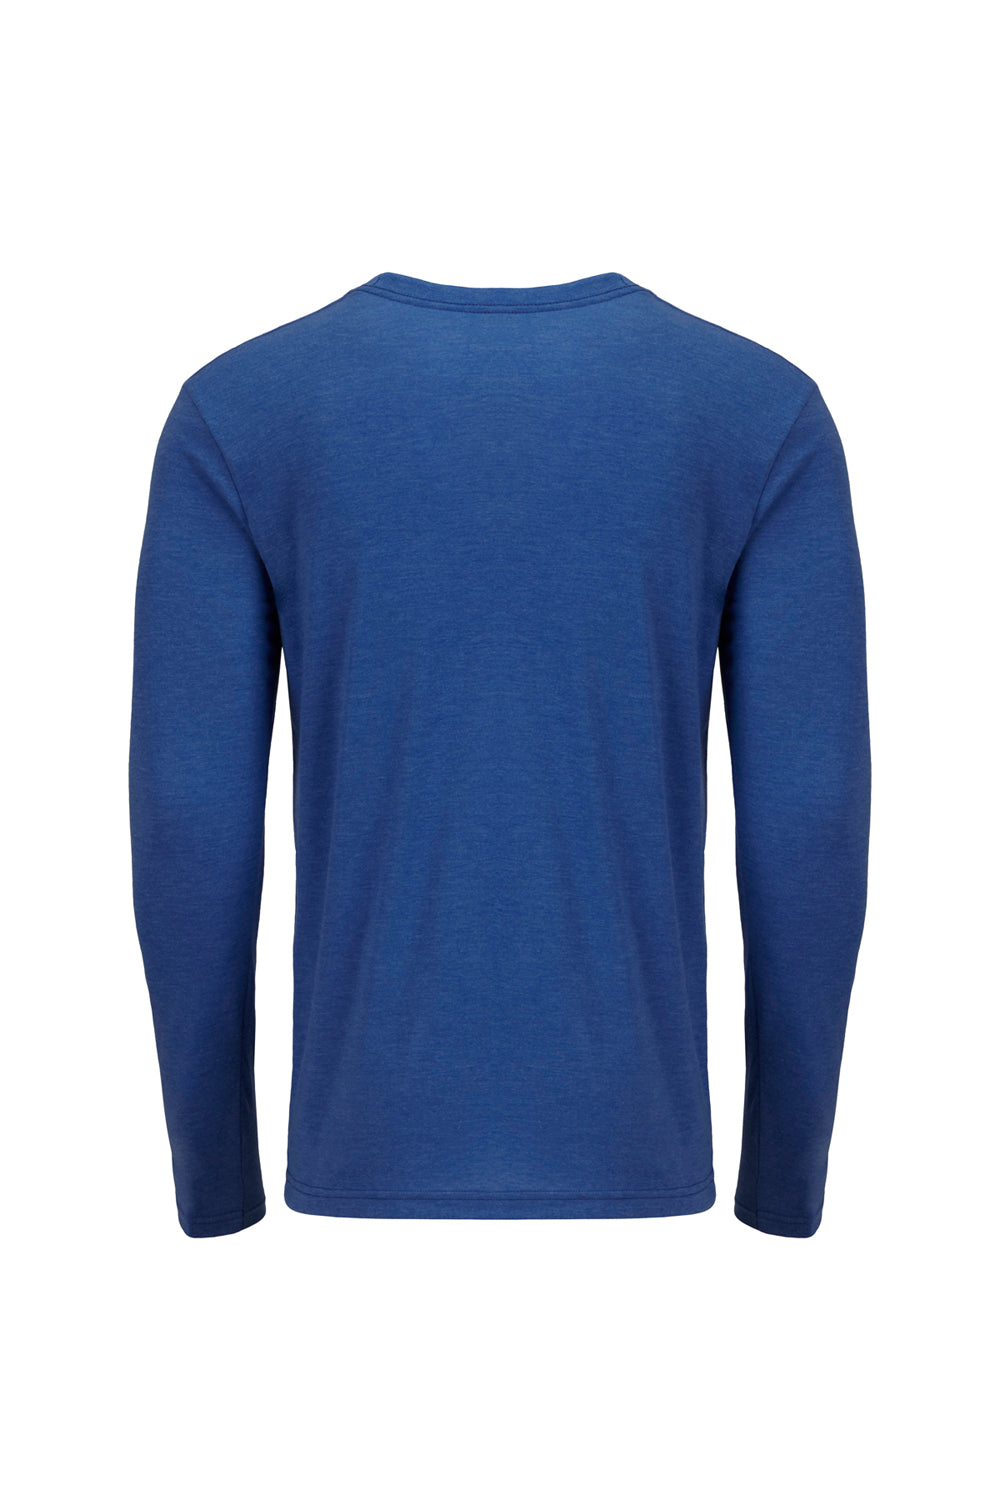 Next Level 6071 Mens Jersey Long Sleeve Crewneck T-Shirt Royal Blue Back